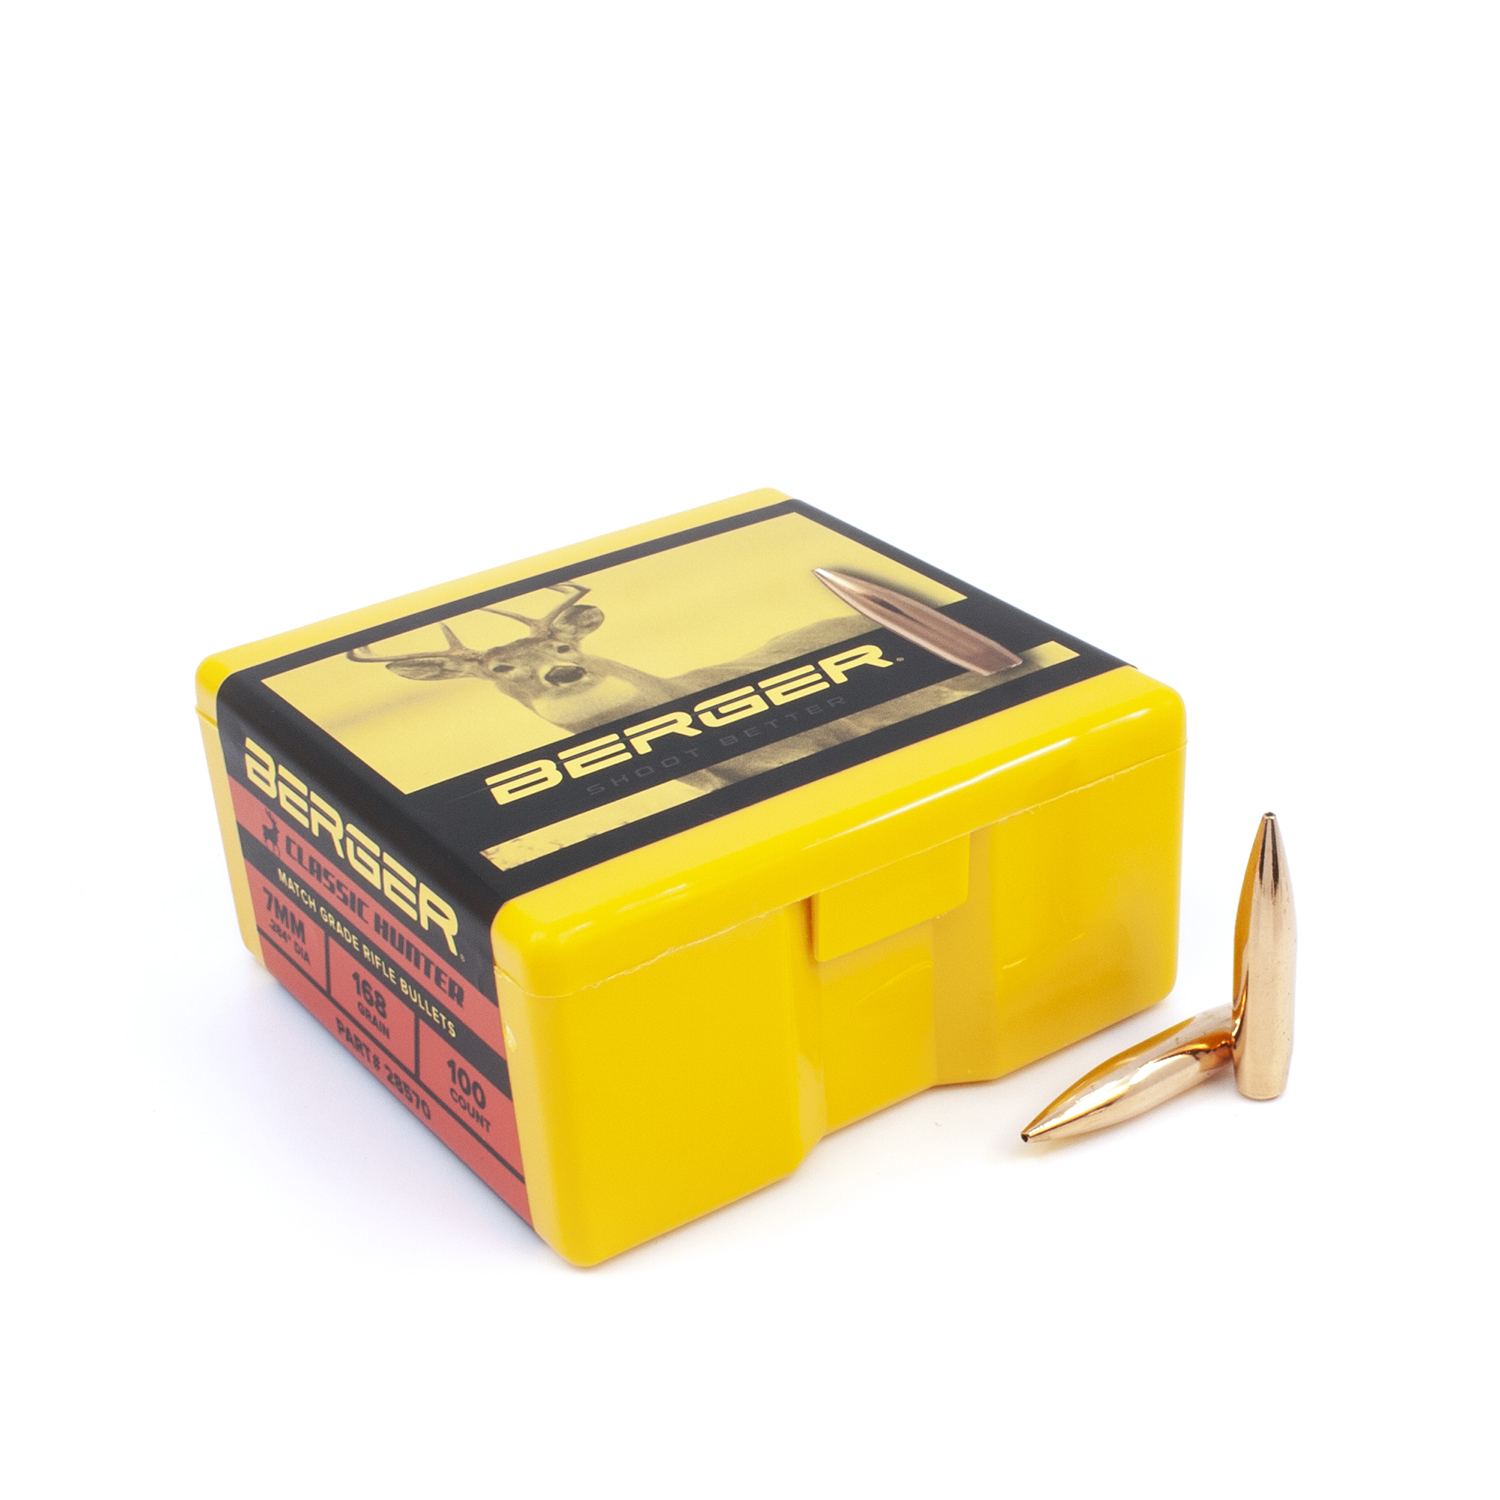 Berger Bullets - 7mm 168gr Classic Hunter - Box of 100